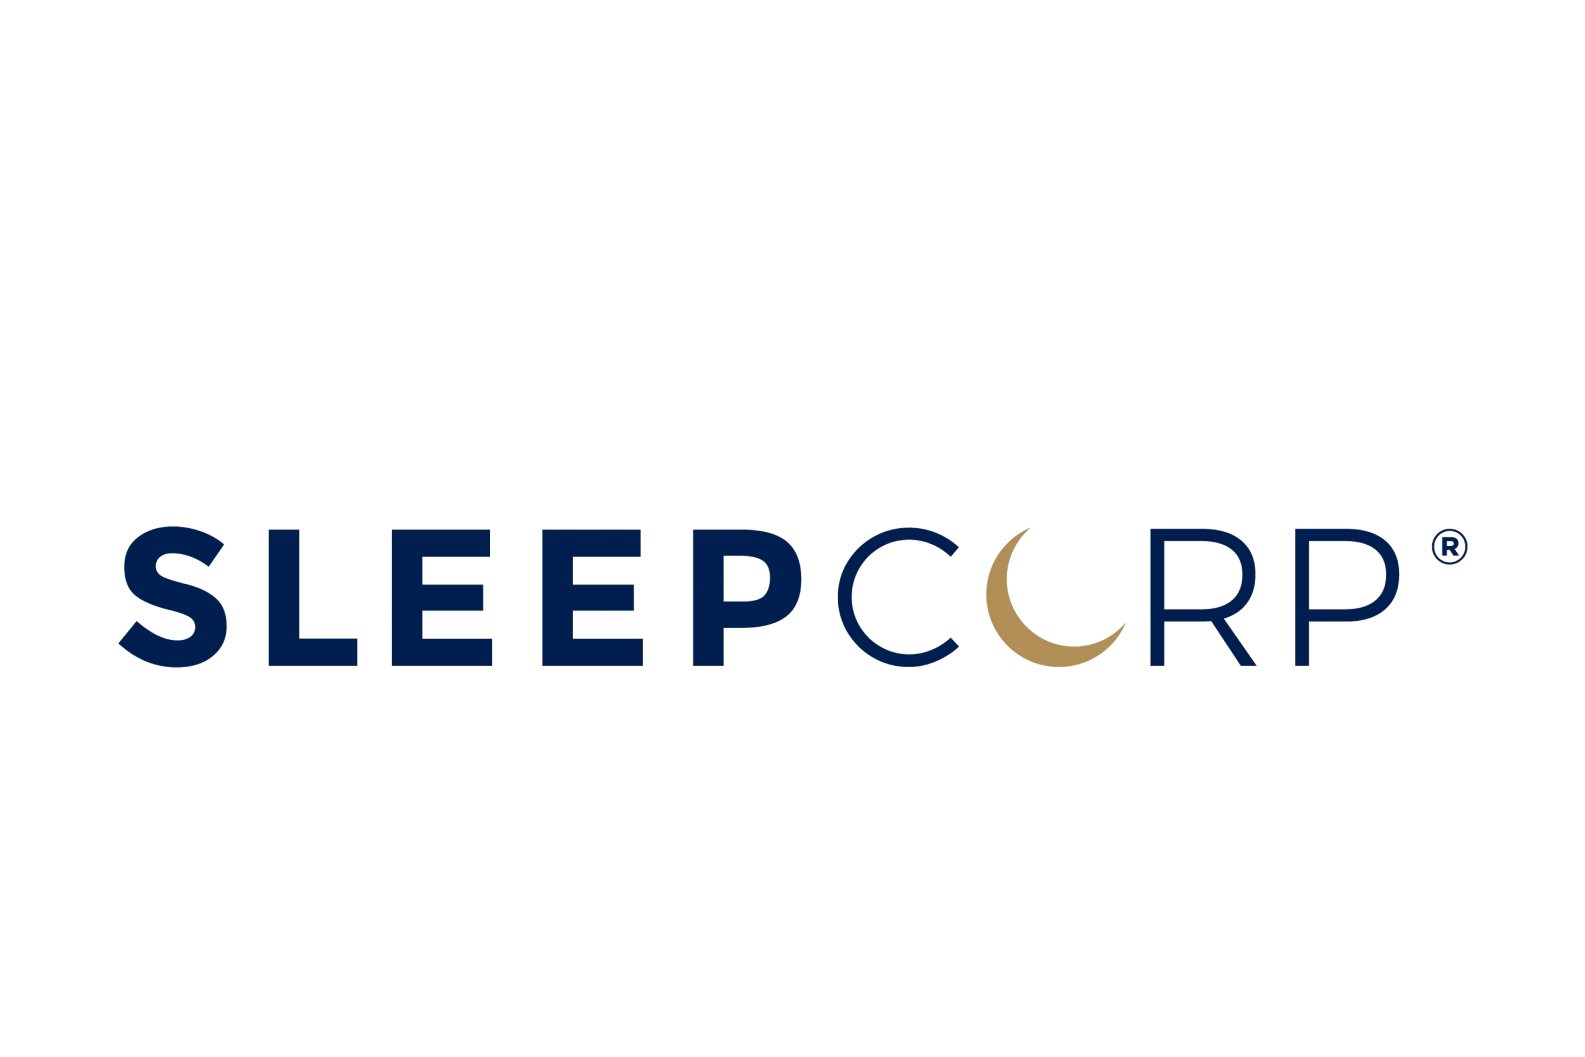 sleepcorp logo